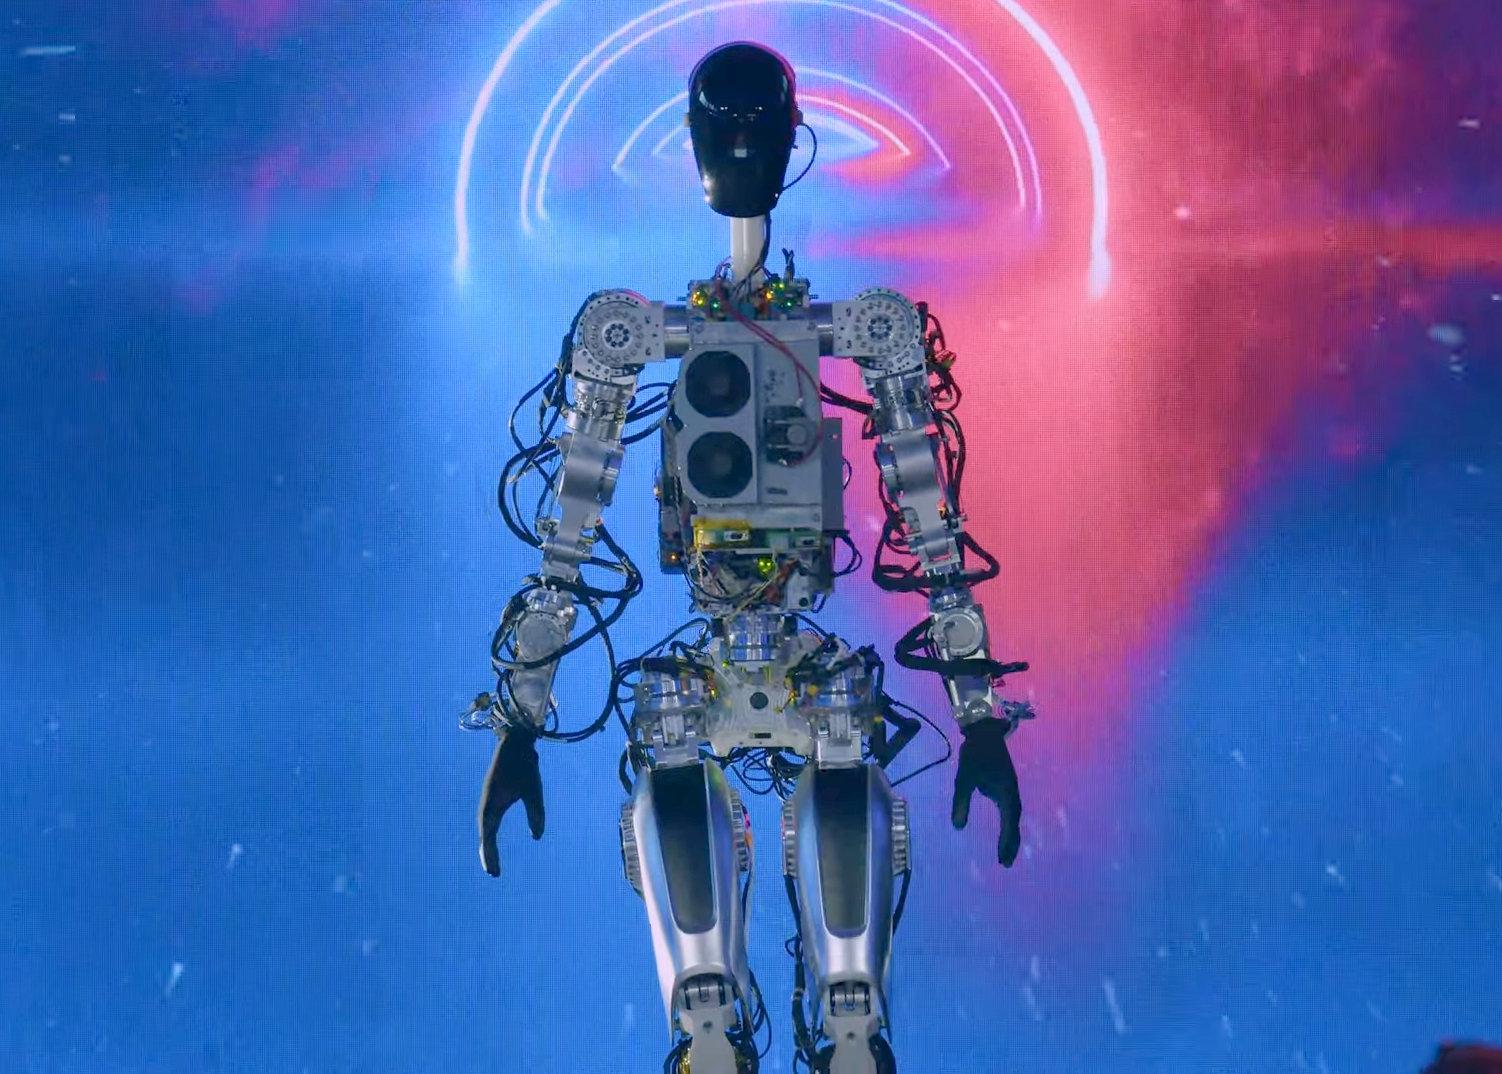 Mr. Robot's Big Reveal Took Way Too Long to Arrive